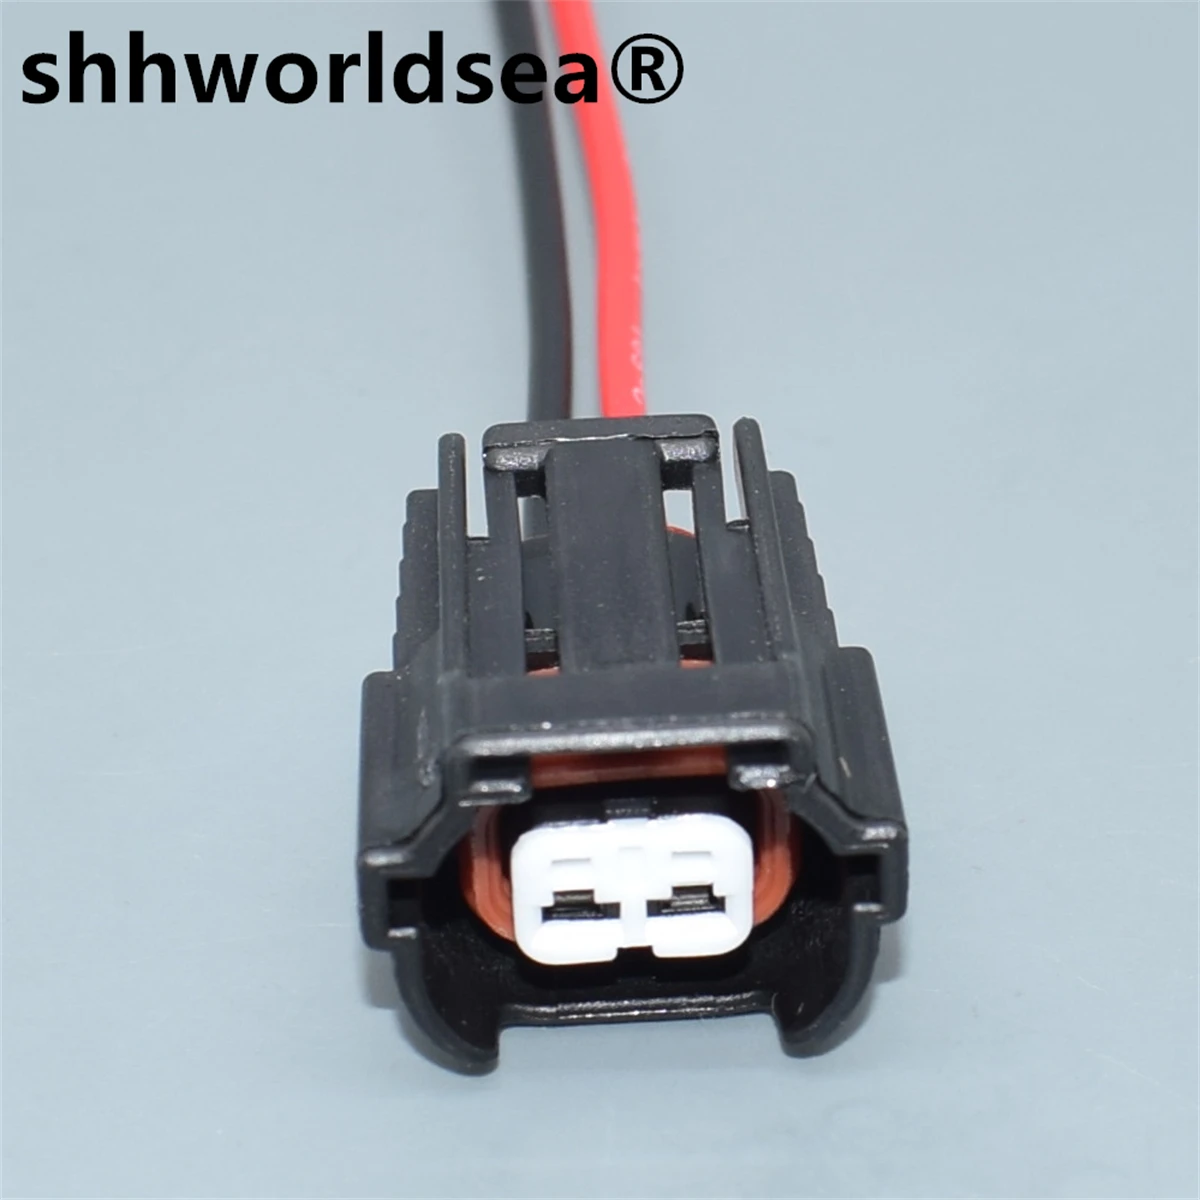 

shhworldsea 2 Pin Fuel Injector Connector Plug Wire Harness 06A973722 For Golf Jetta Polo For A4 A6 Q3 Q5 6195-0043 06A 973 722